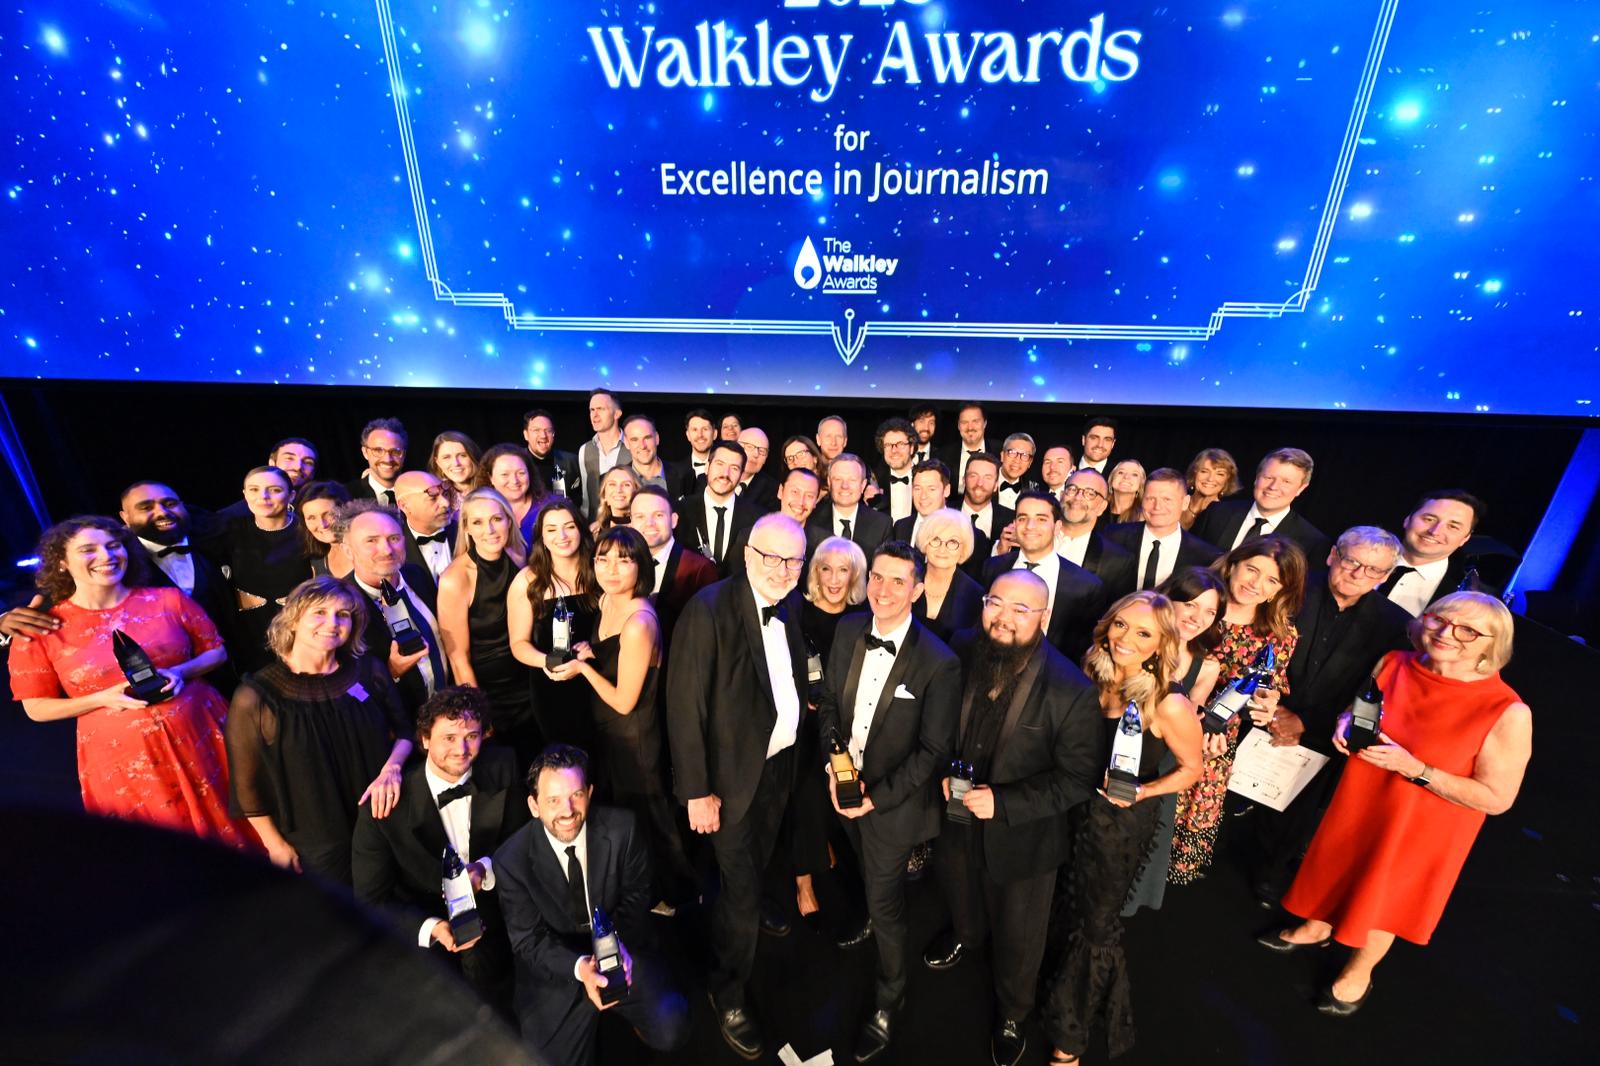 68th Walkley Awards winners announced